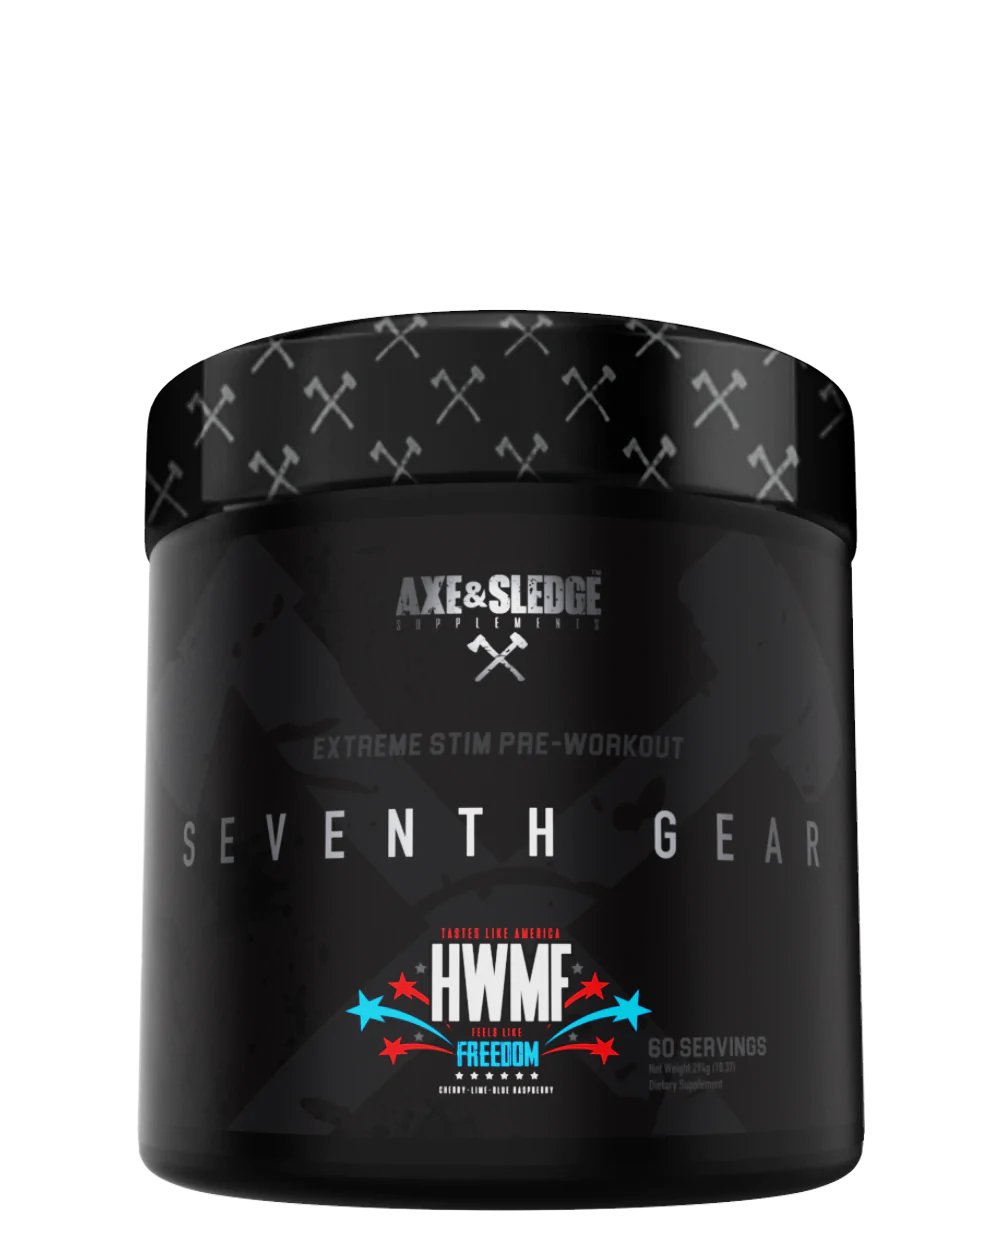 Axe & Sledge Seventh Gear Pre-Workout 60 Servings